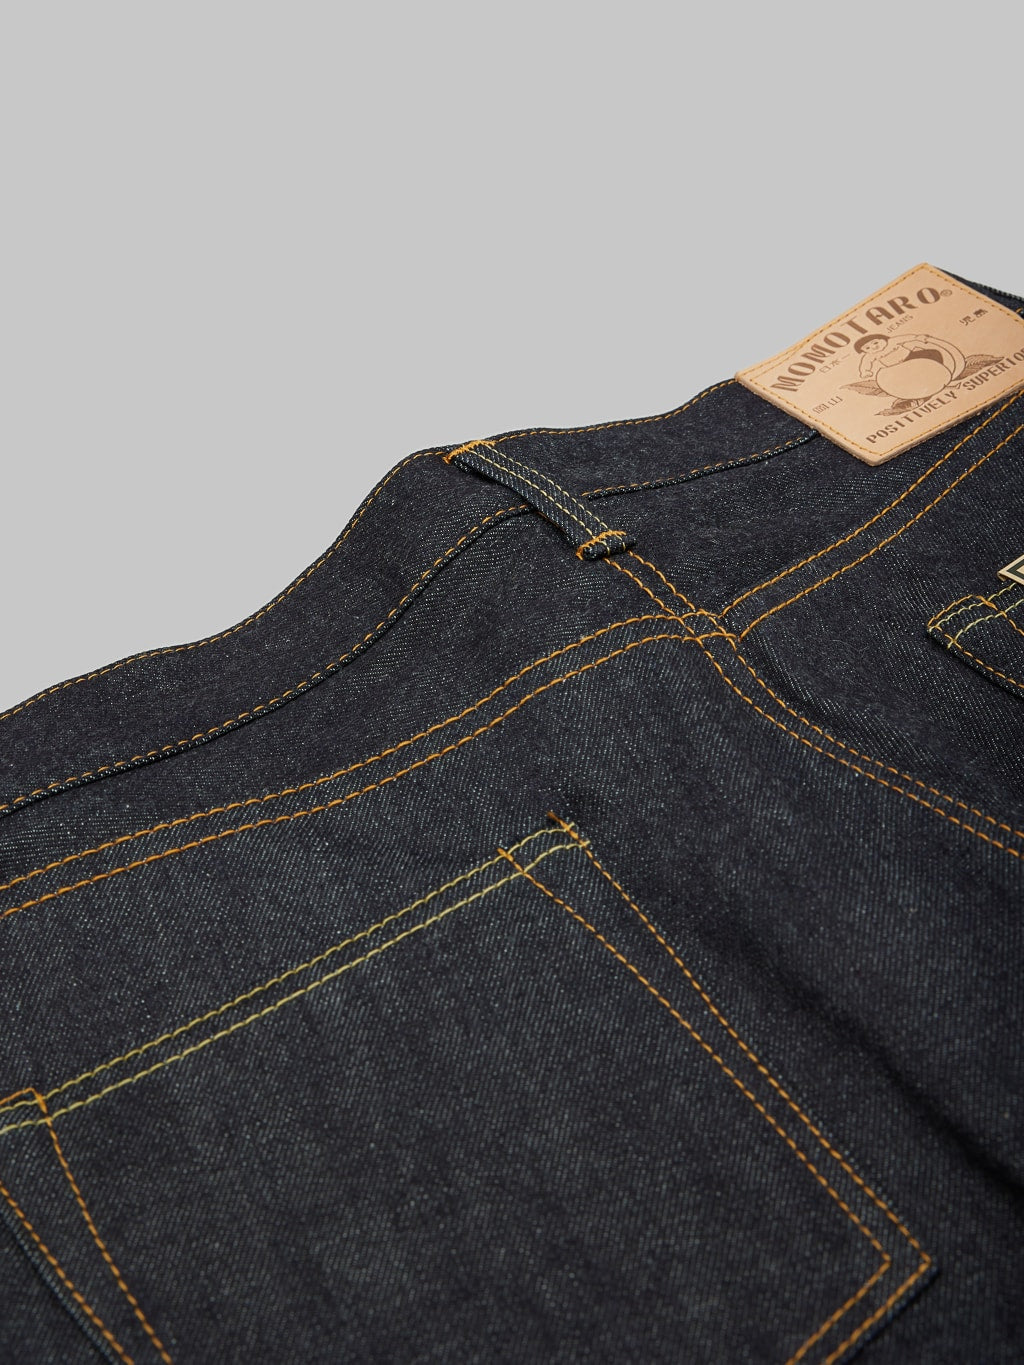 momotaro jeans 0306 12 12oz selvedge denim tight tapered belt loop